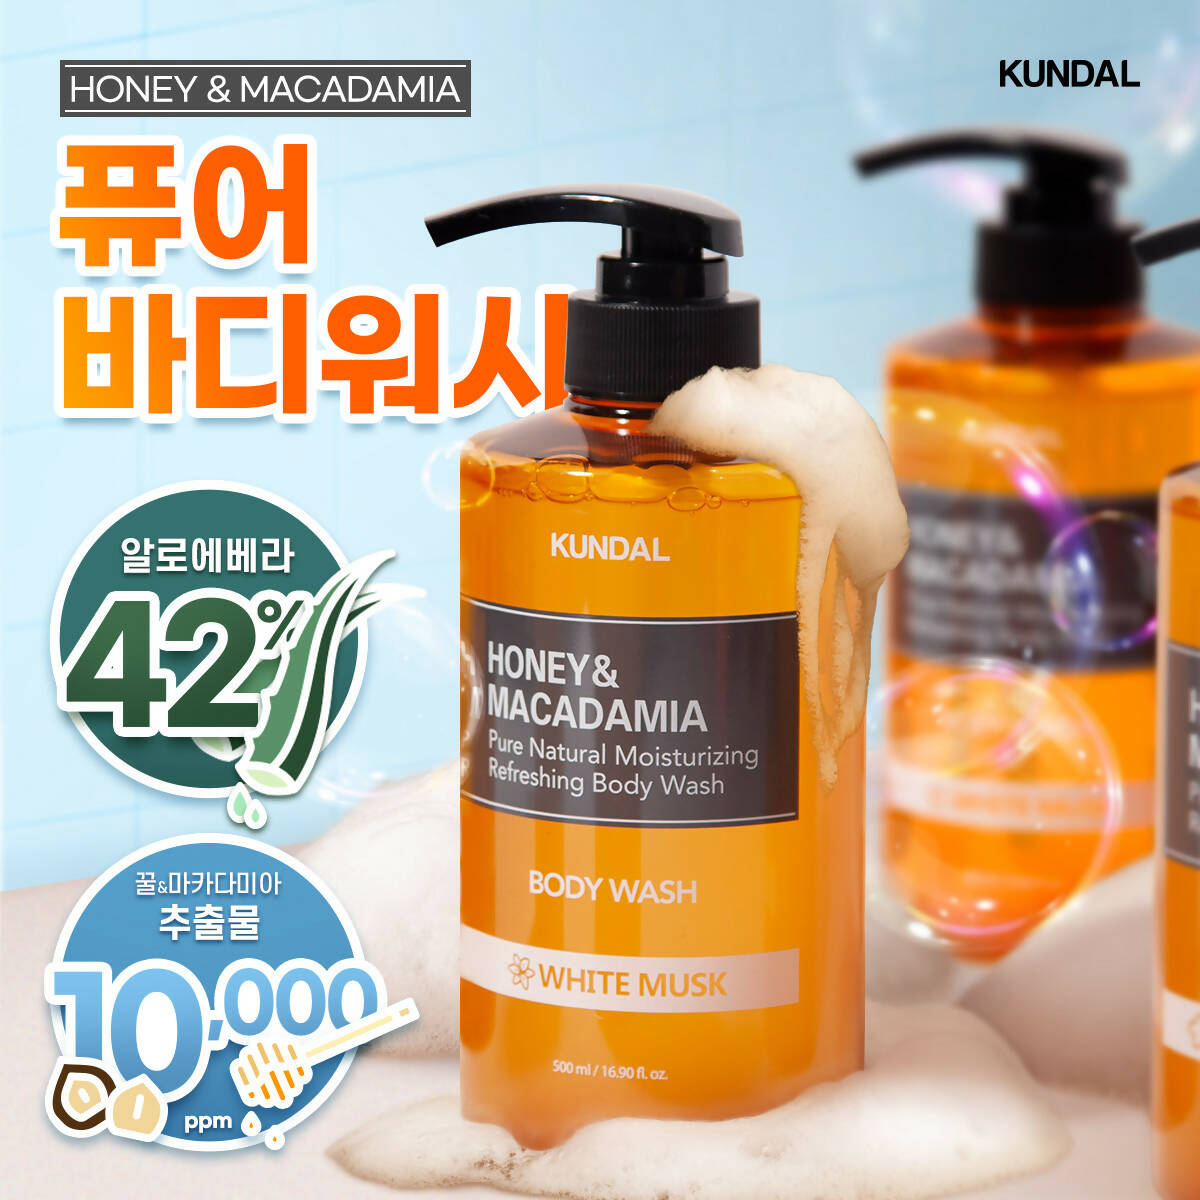 0304_Kundal-Honey & Macadamia Body Wash-Thumbnail